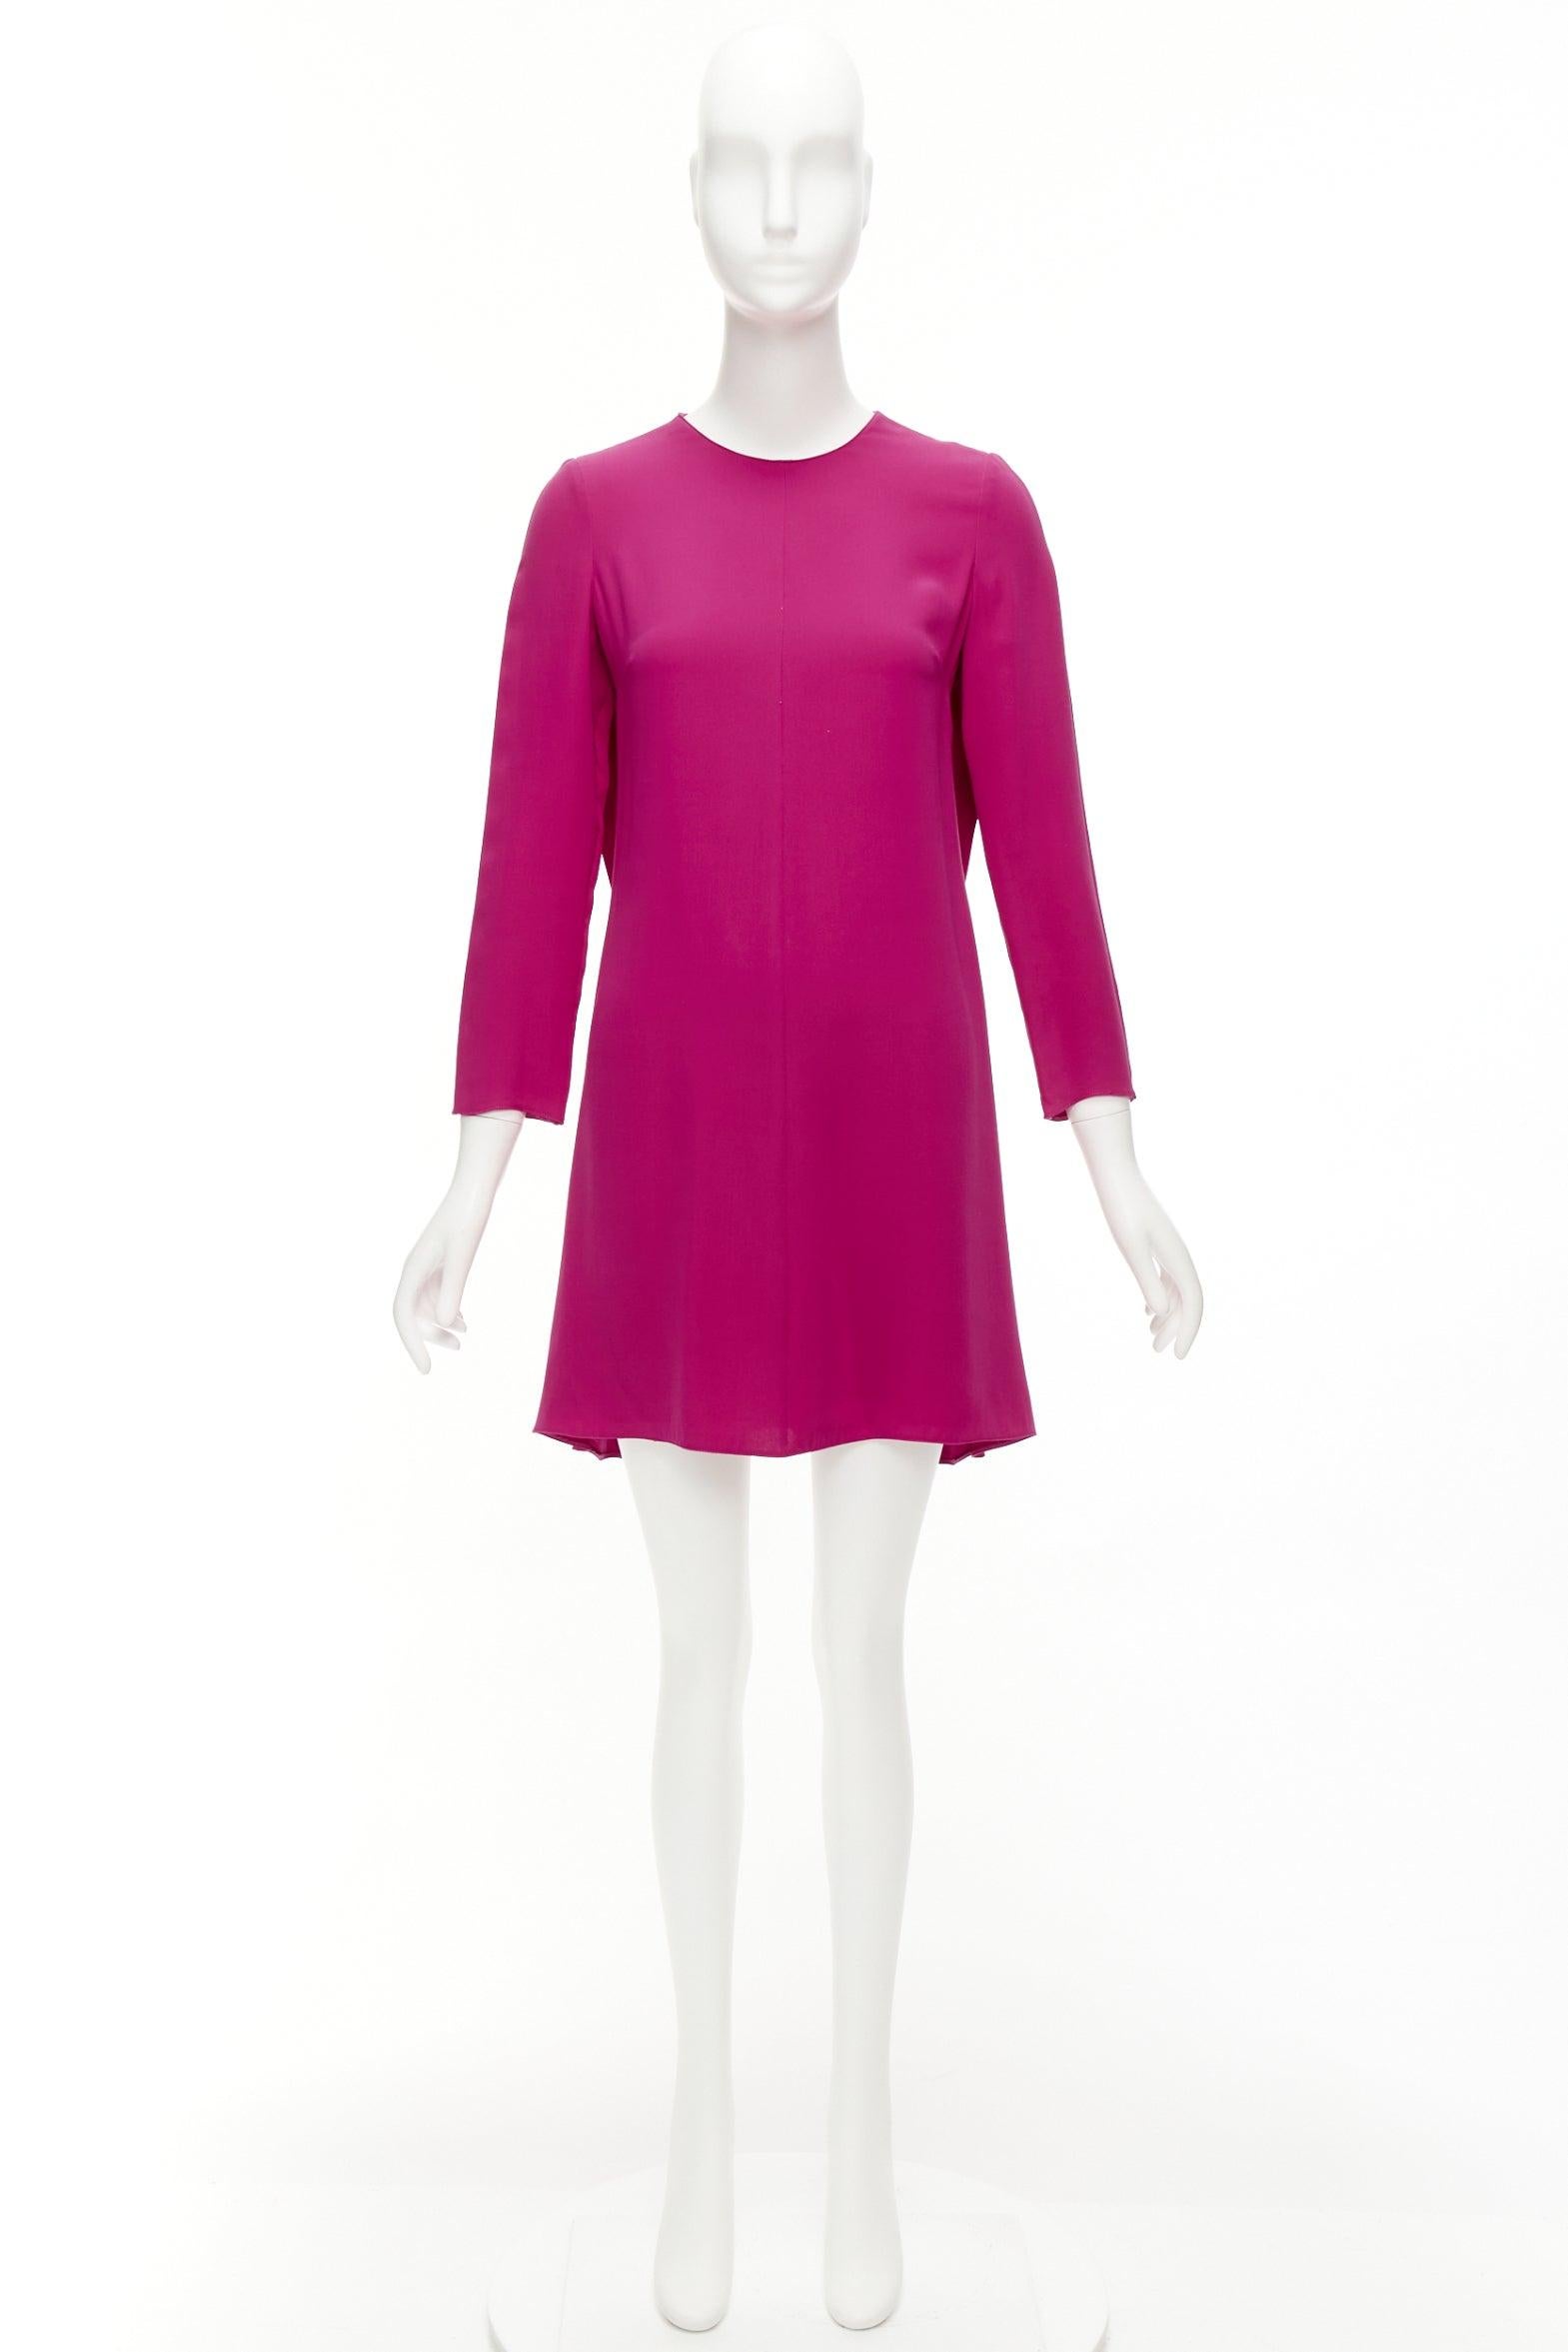 VALENTINO 100% silk fuchsia pink keyhole side pleats shift dress IT38 XS For Sale 6